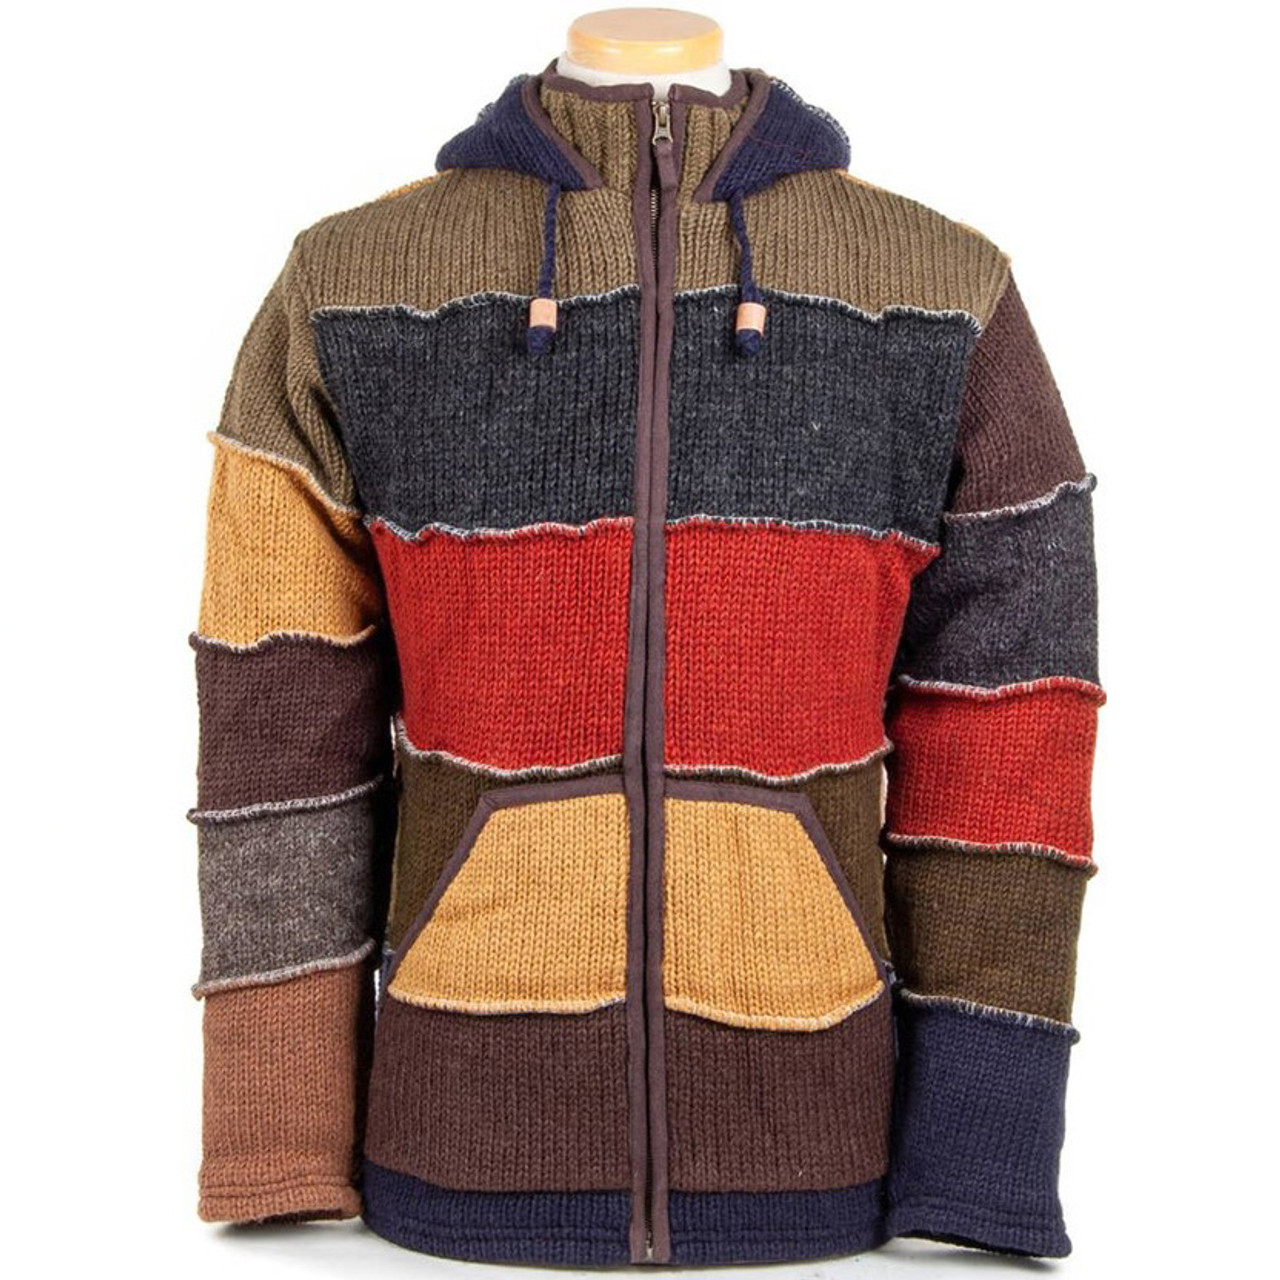 Patchwork - Men's Wool Knit Hooded Jacket